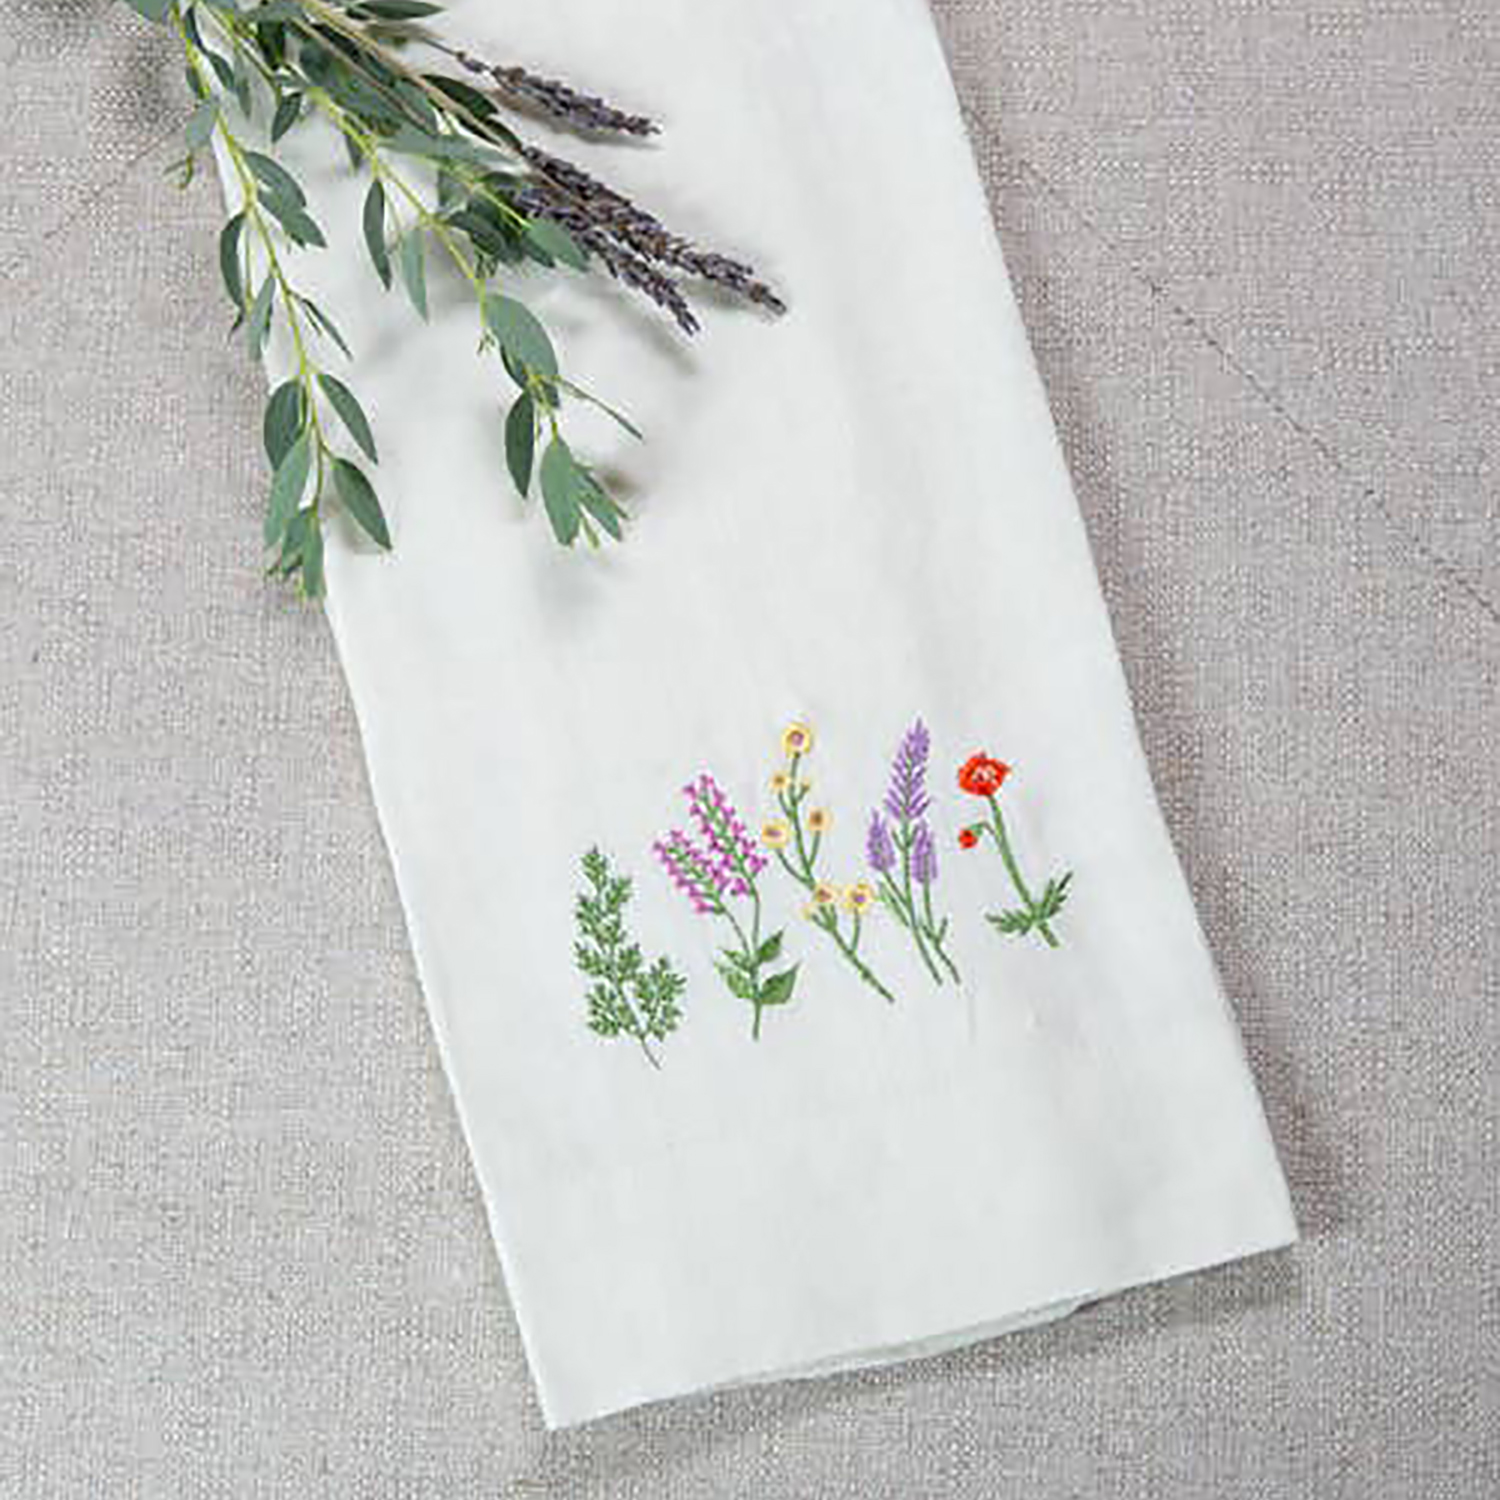 https://portalofhope.com/wp-content/uploads/2022/06/Crown-Linen-Designs-Embroidered-Wildflowers-Kitchen-Bath-Linen-Hand-Towels-2.jpg